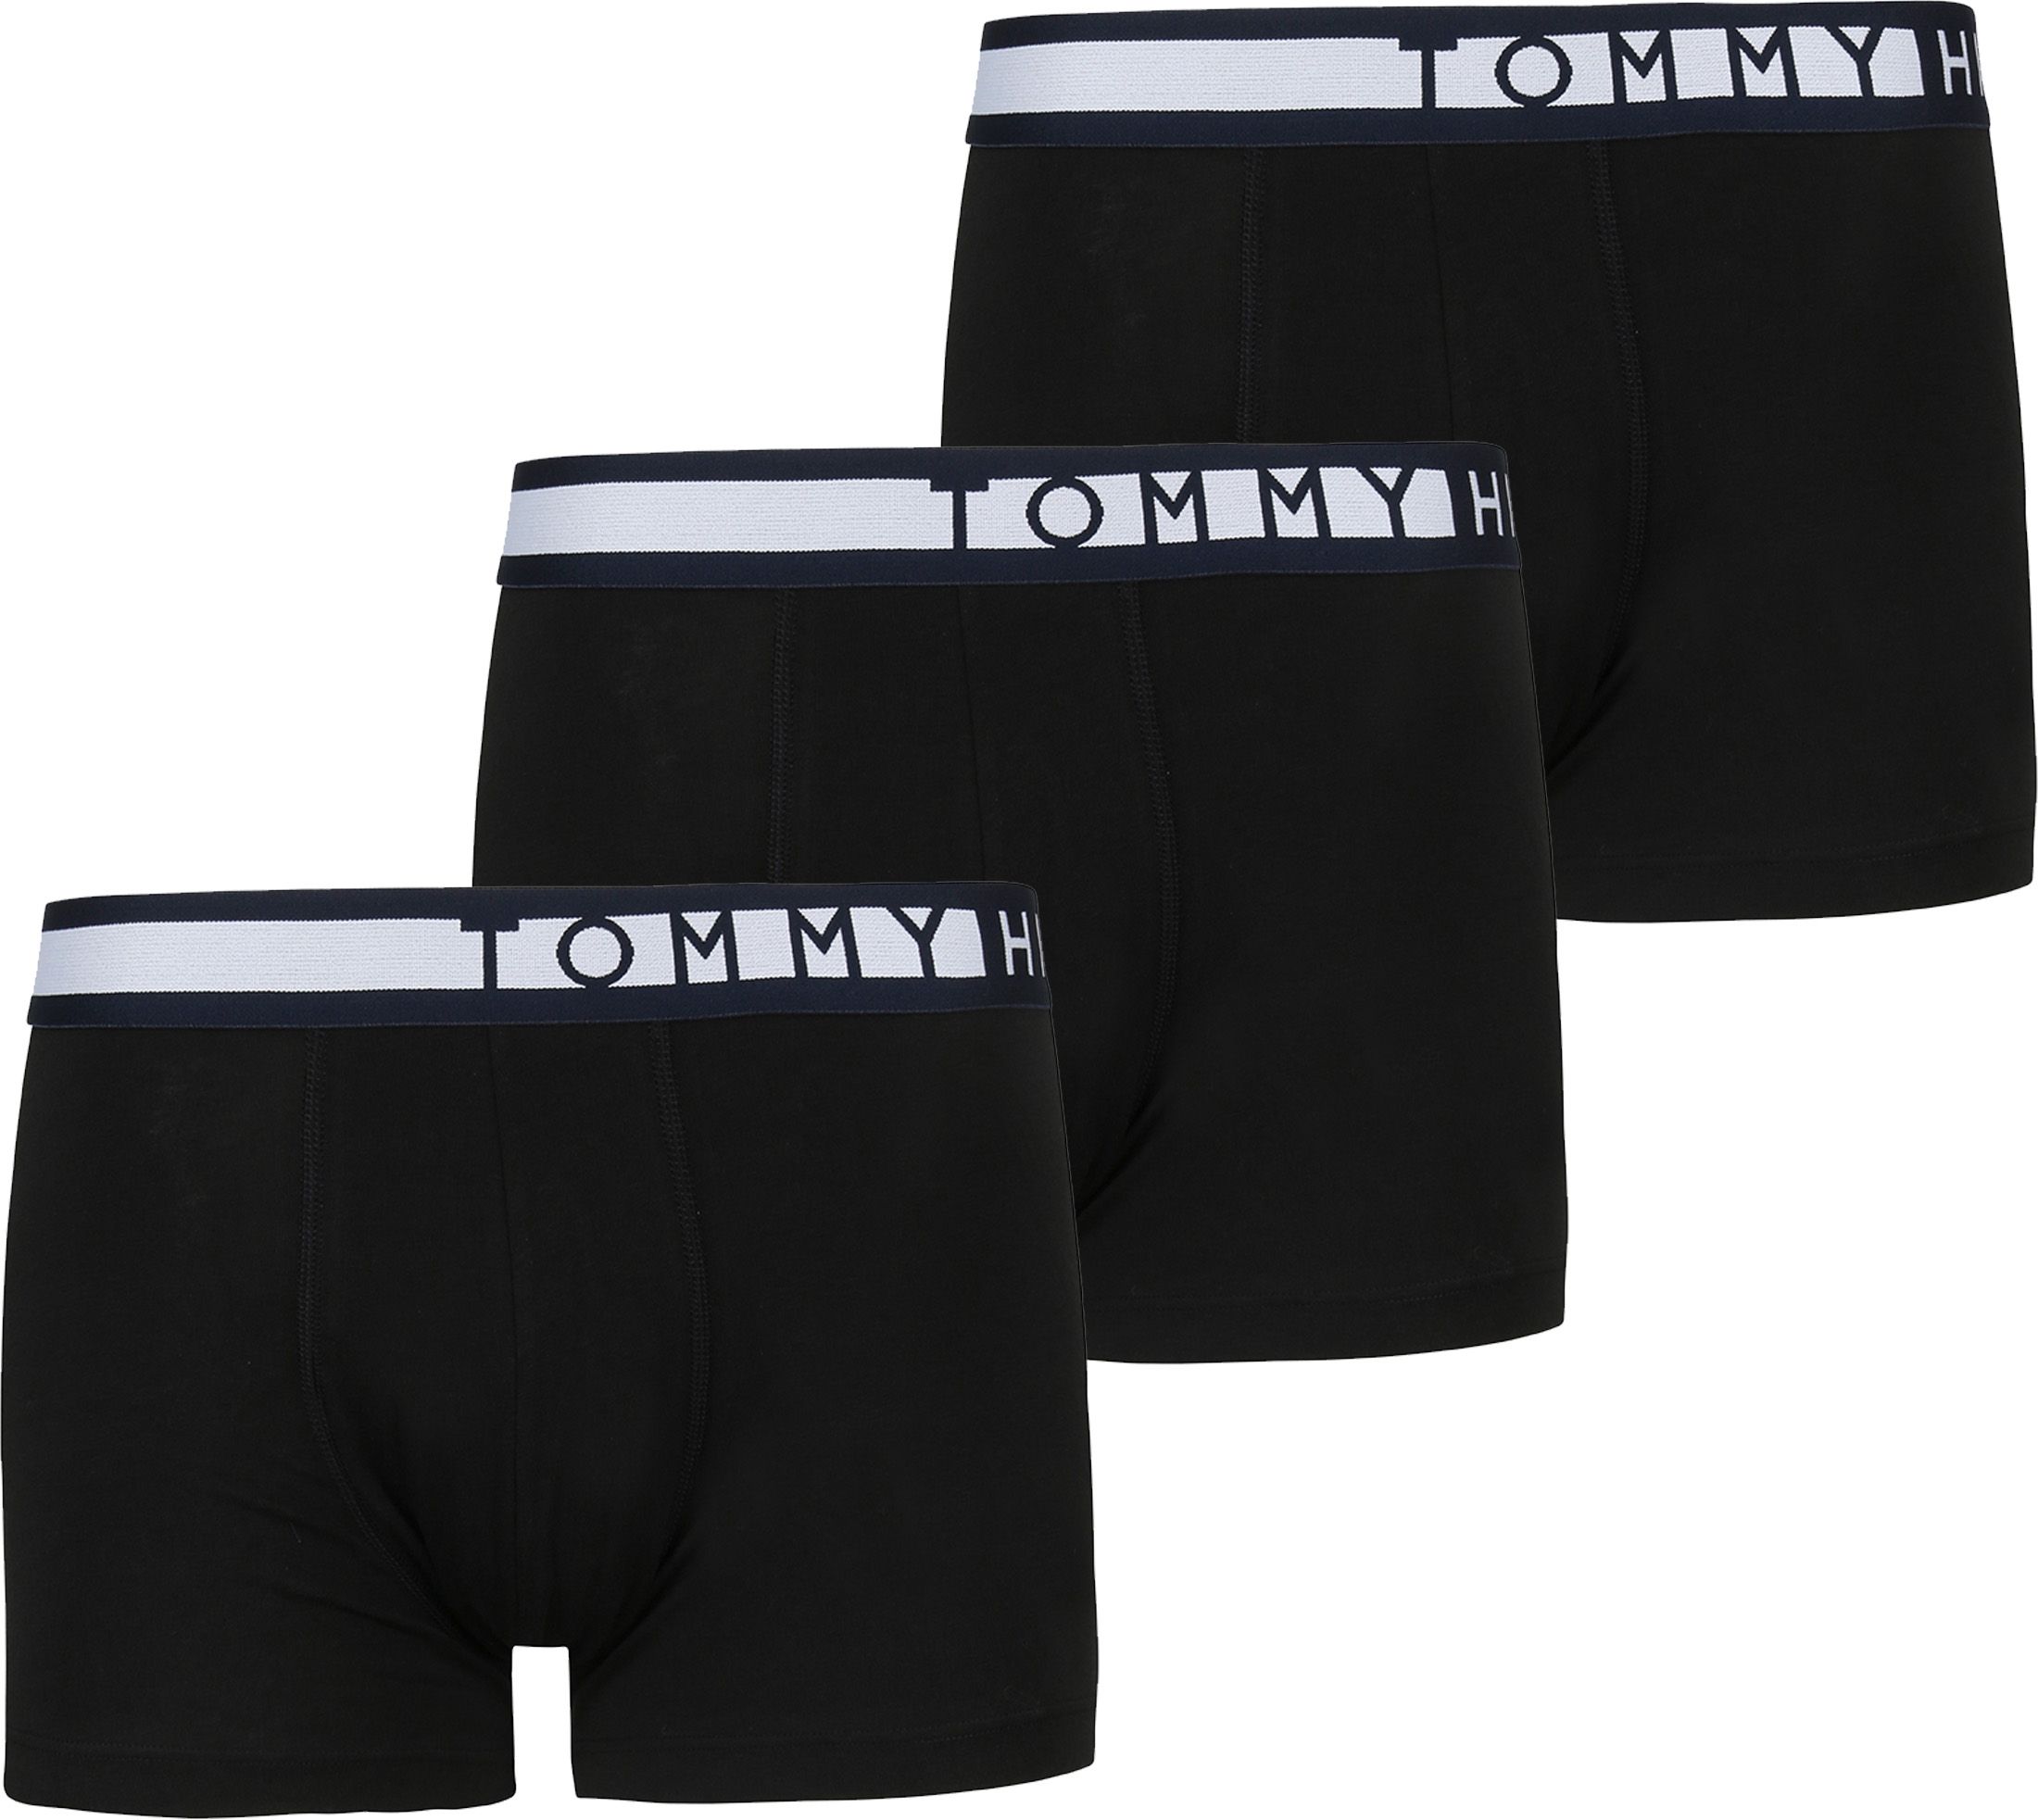 Tommy Hilfiger Boxer Shorts Trunk 3-Pack Black size M